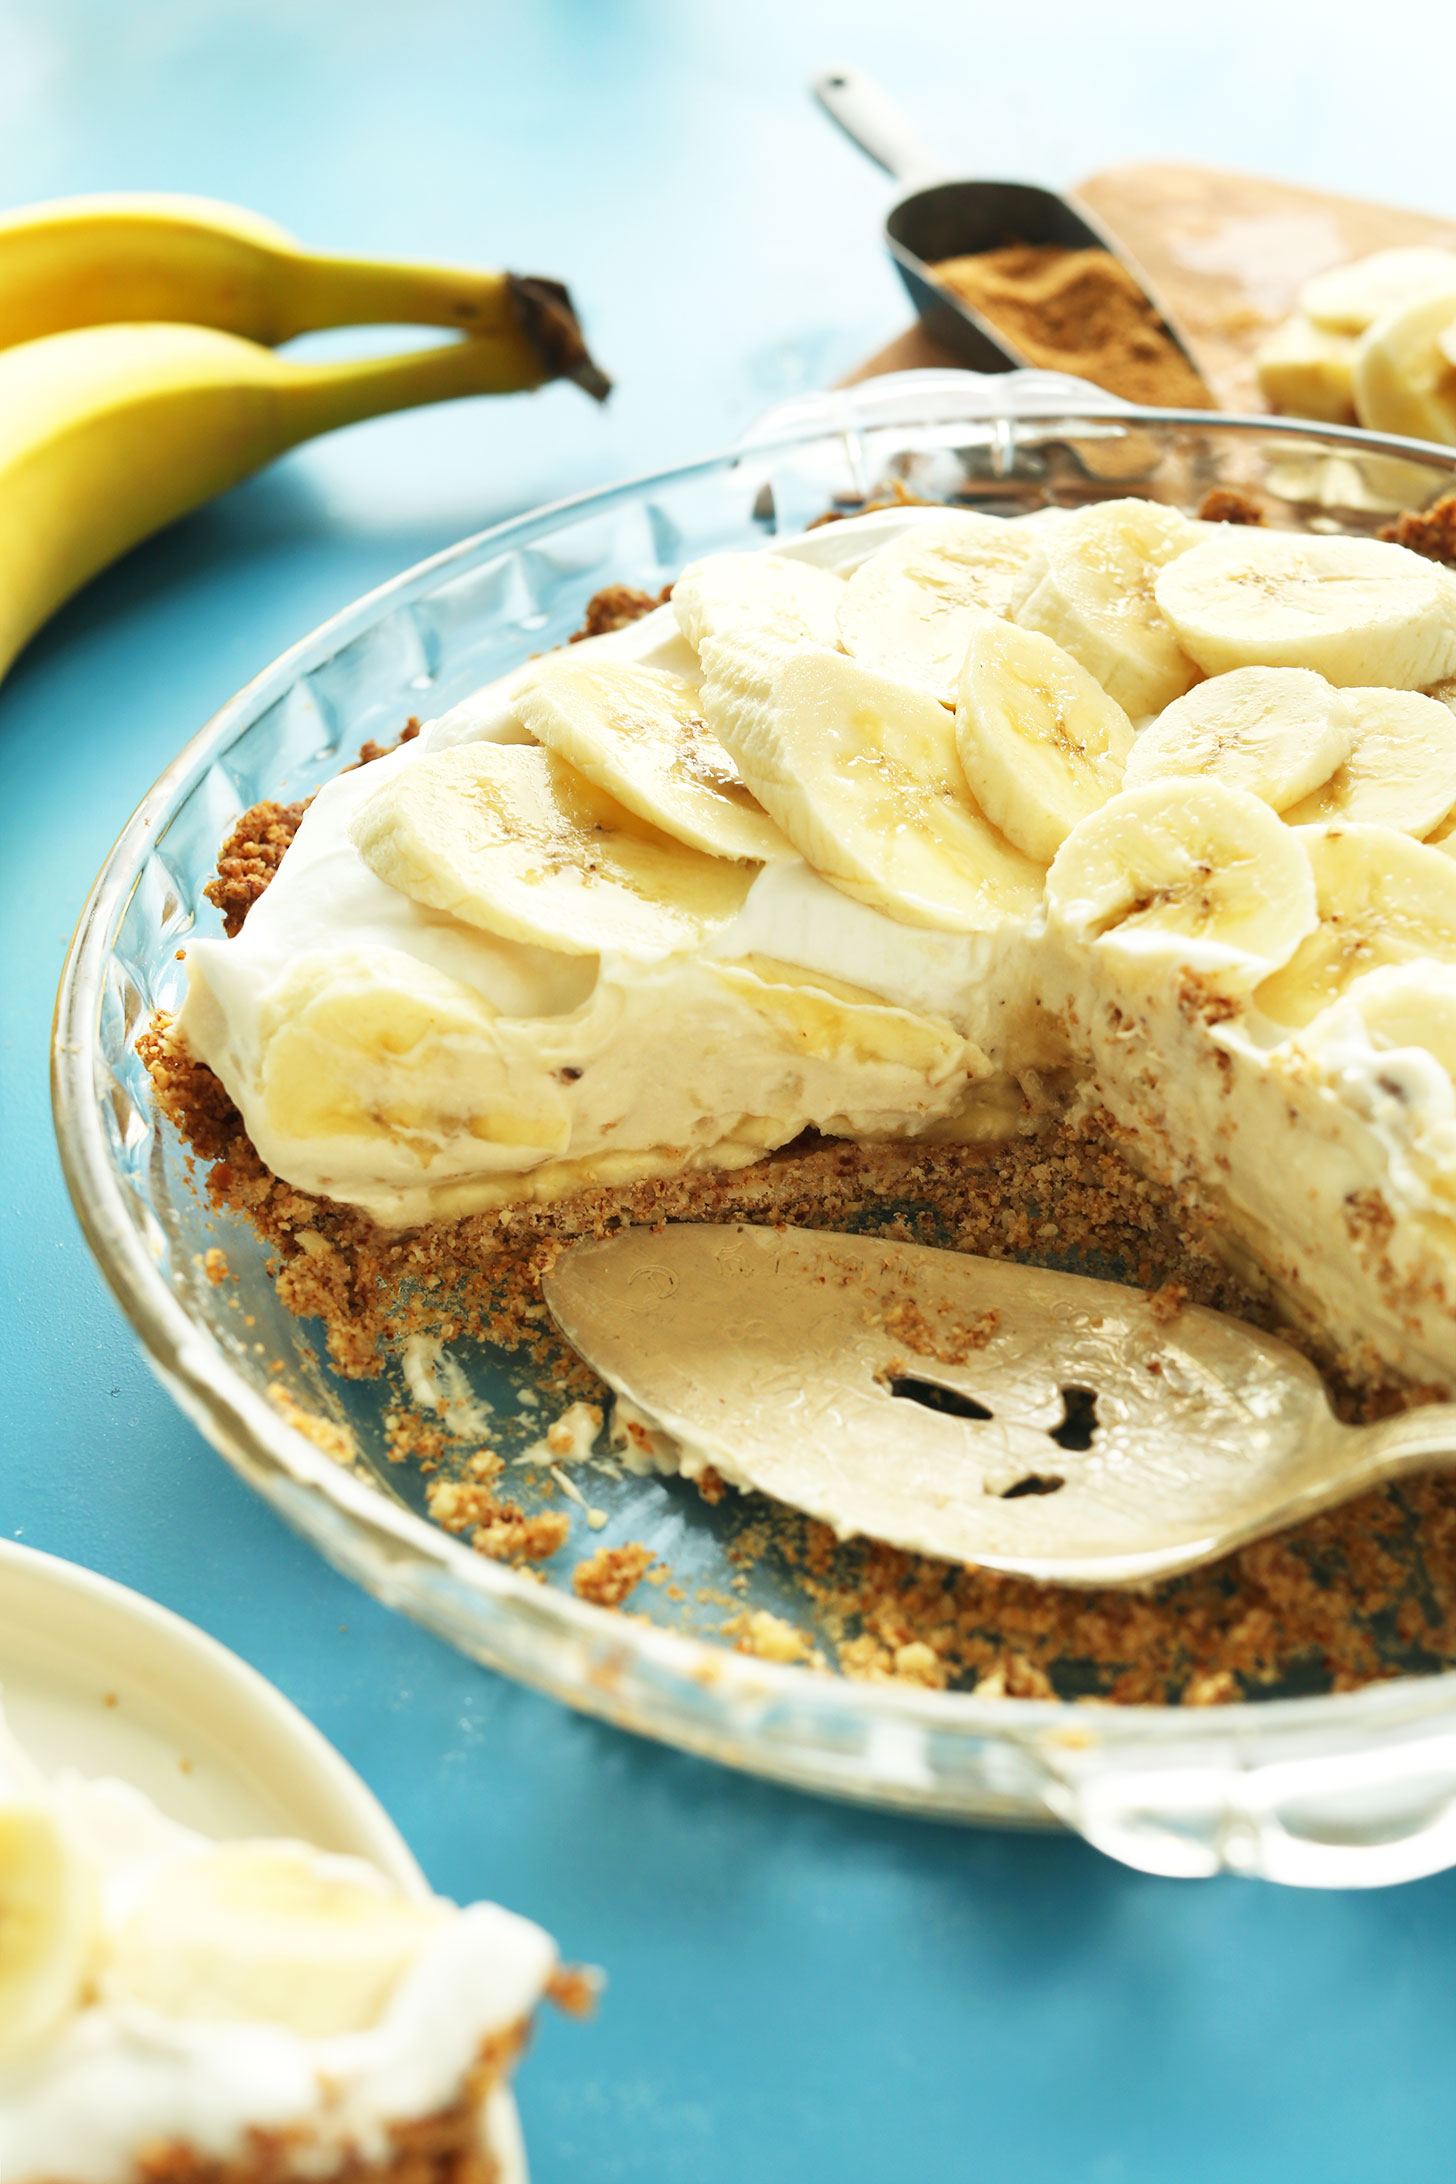 Pie pan with our amazing gluten-free vegan Banana Cream Pie recipe